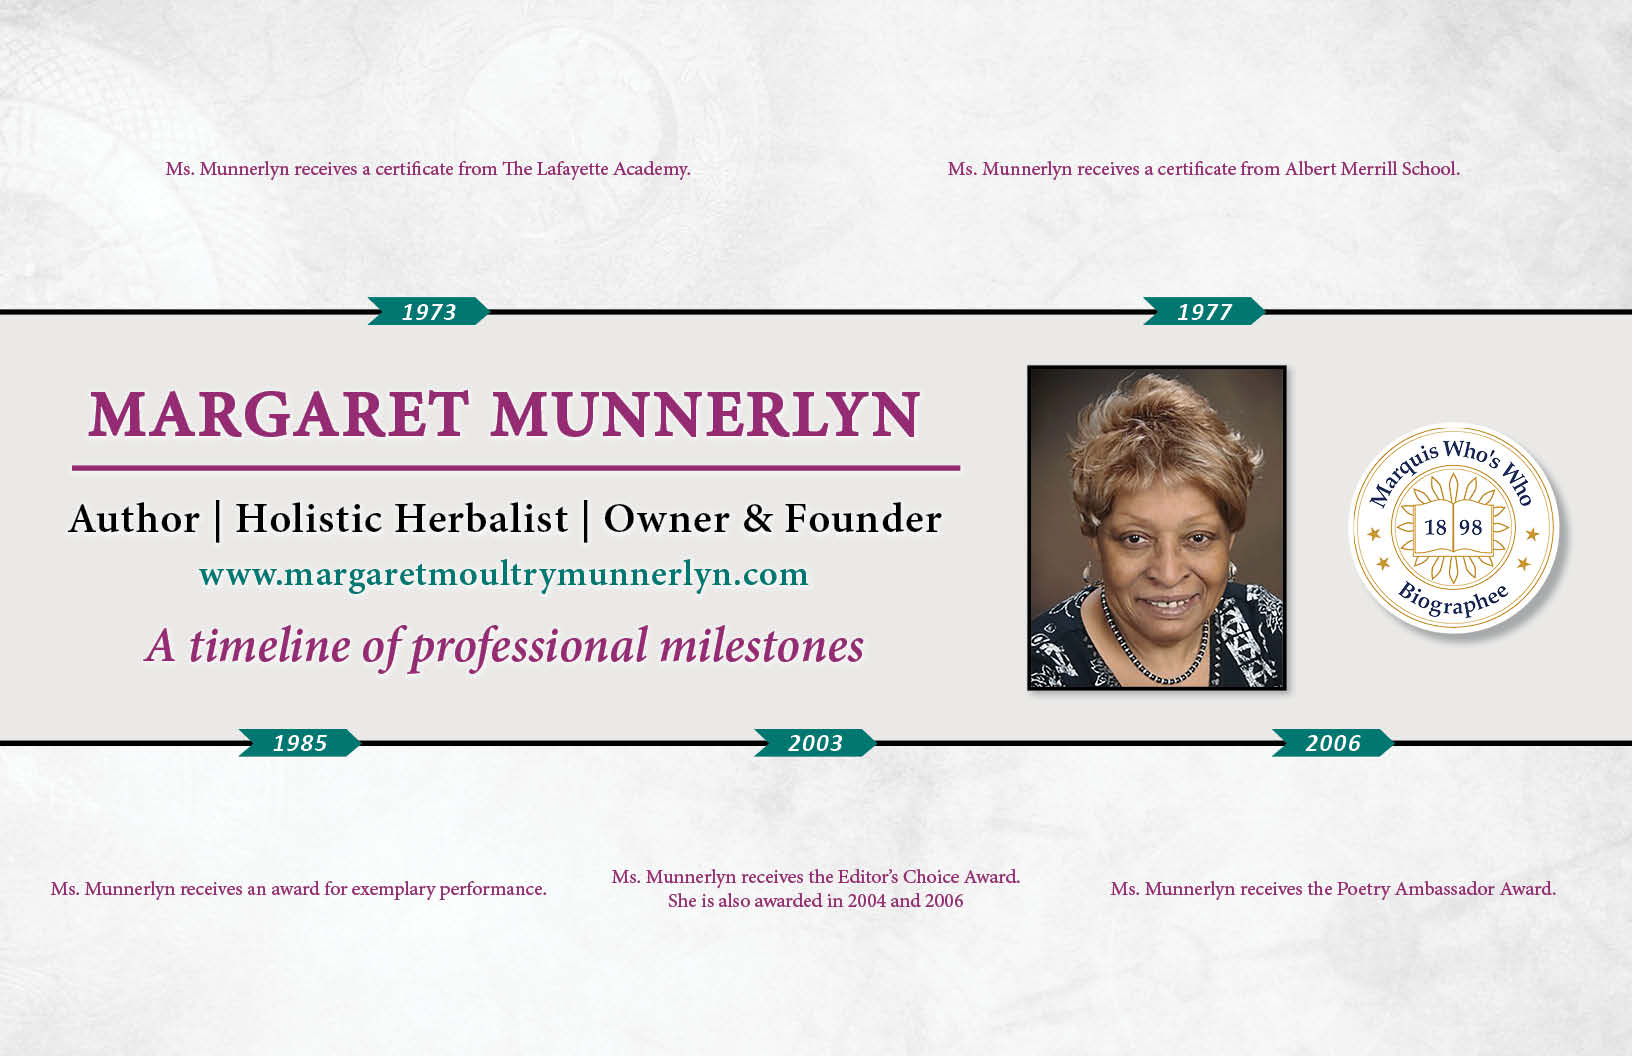 Margaret Munnerlyn Professional Milestones